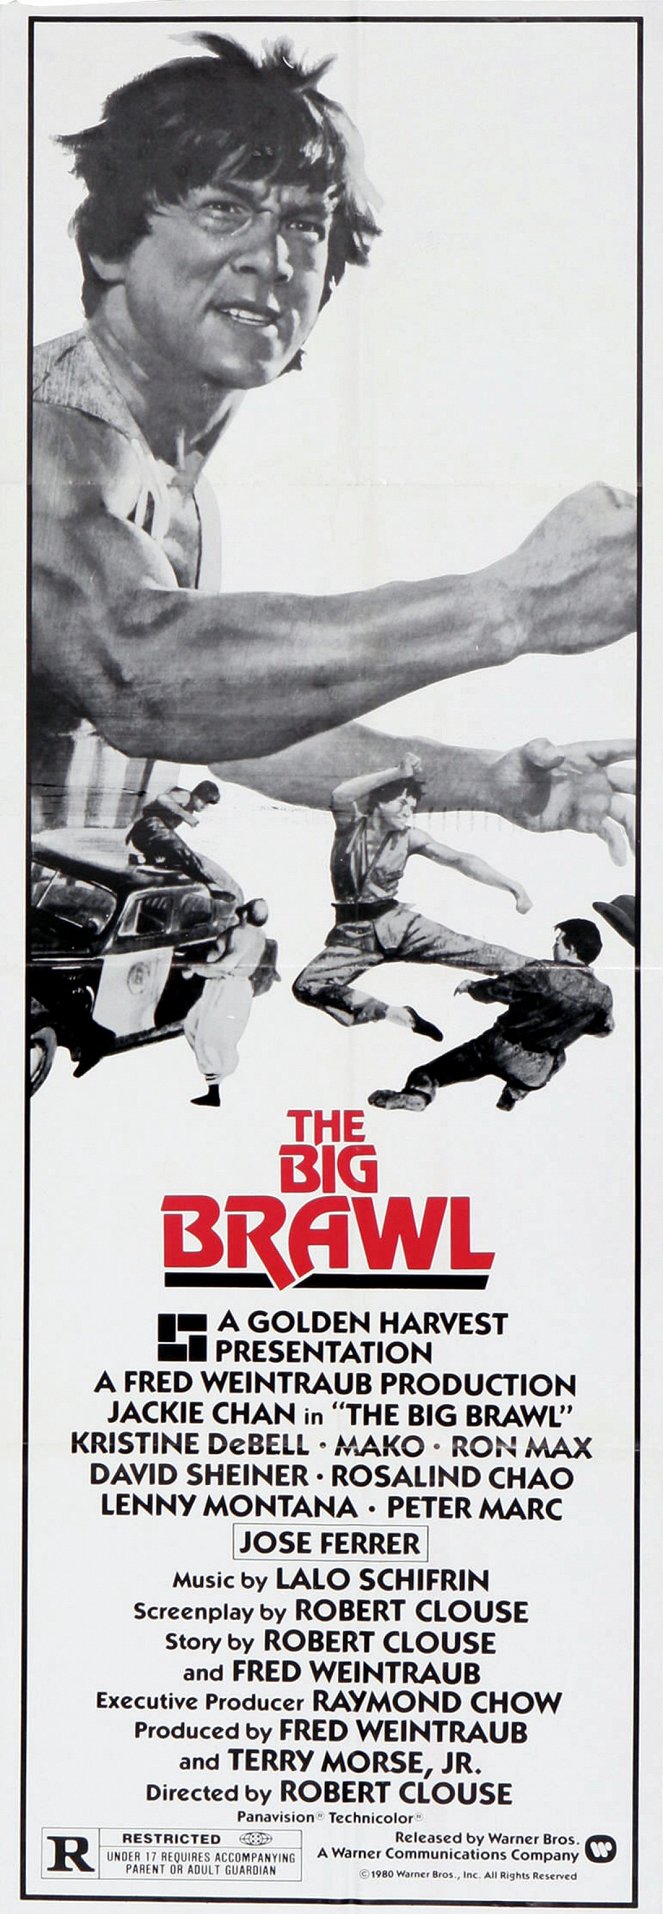 The Big Brawl - Posters